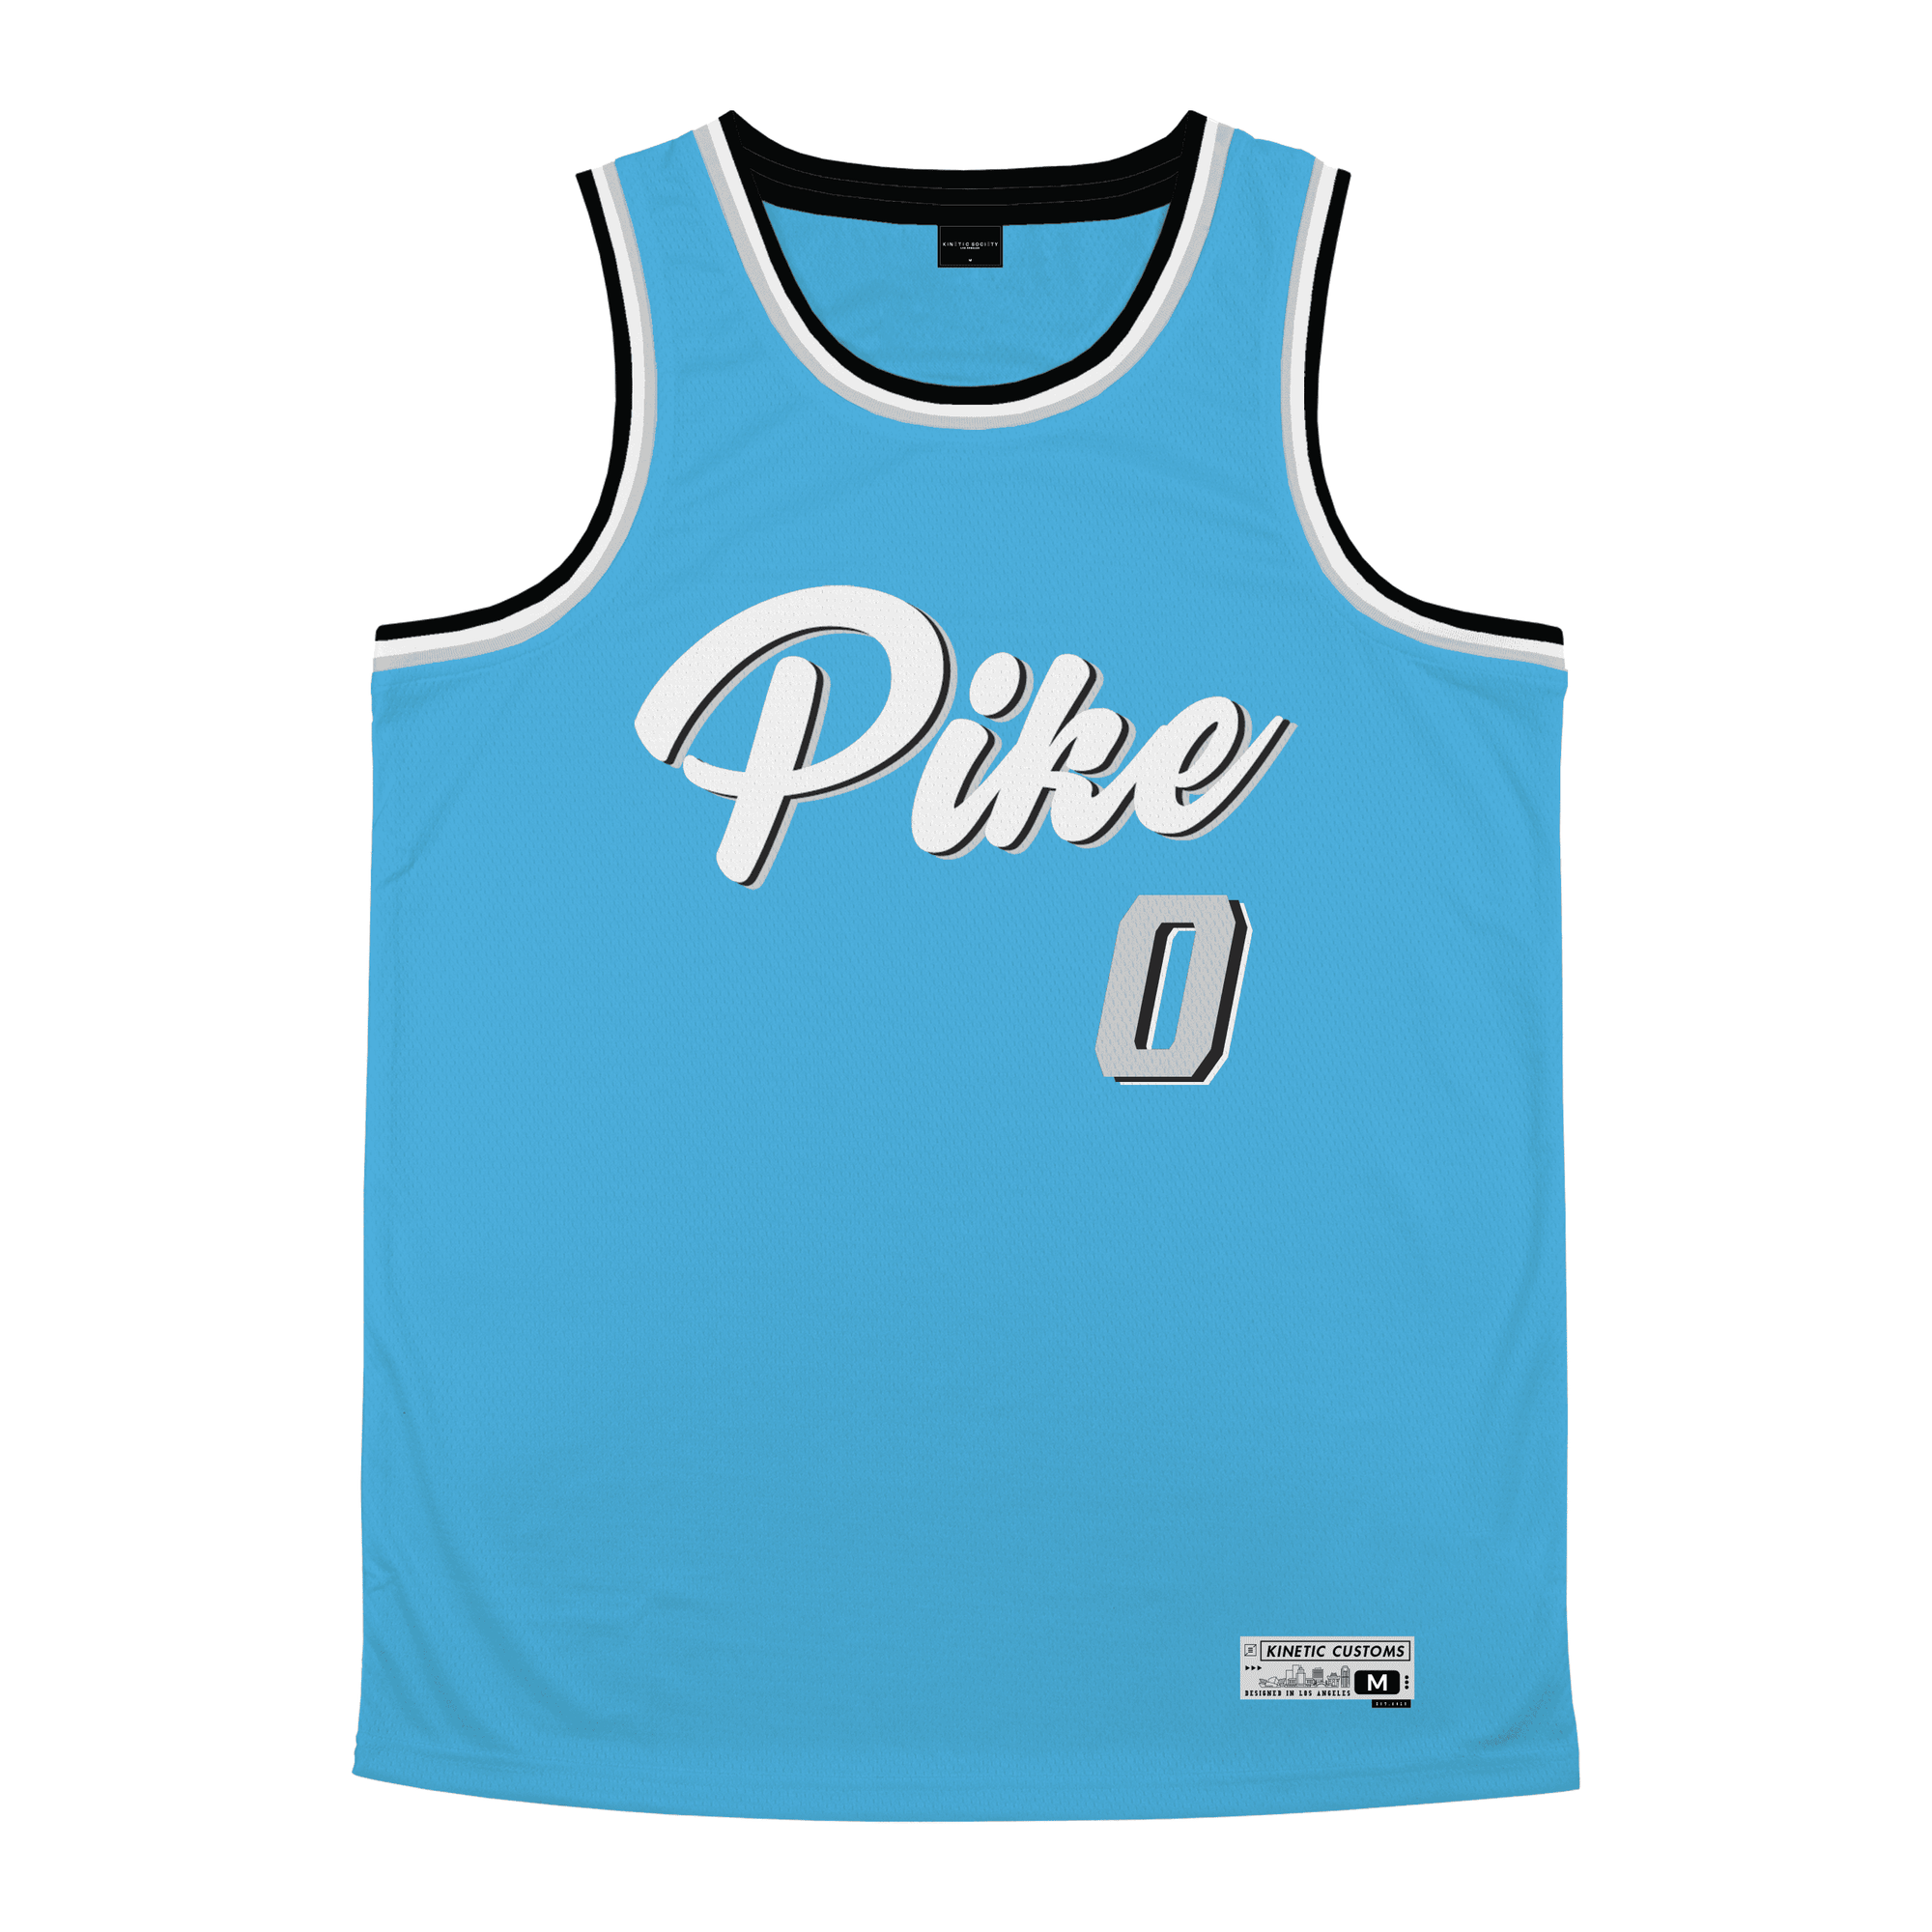 Pi Kappa Alpha - Pacific Mist Basketball Jersey